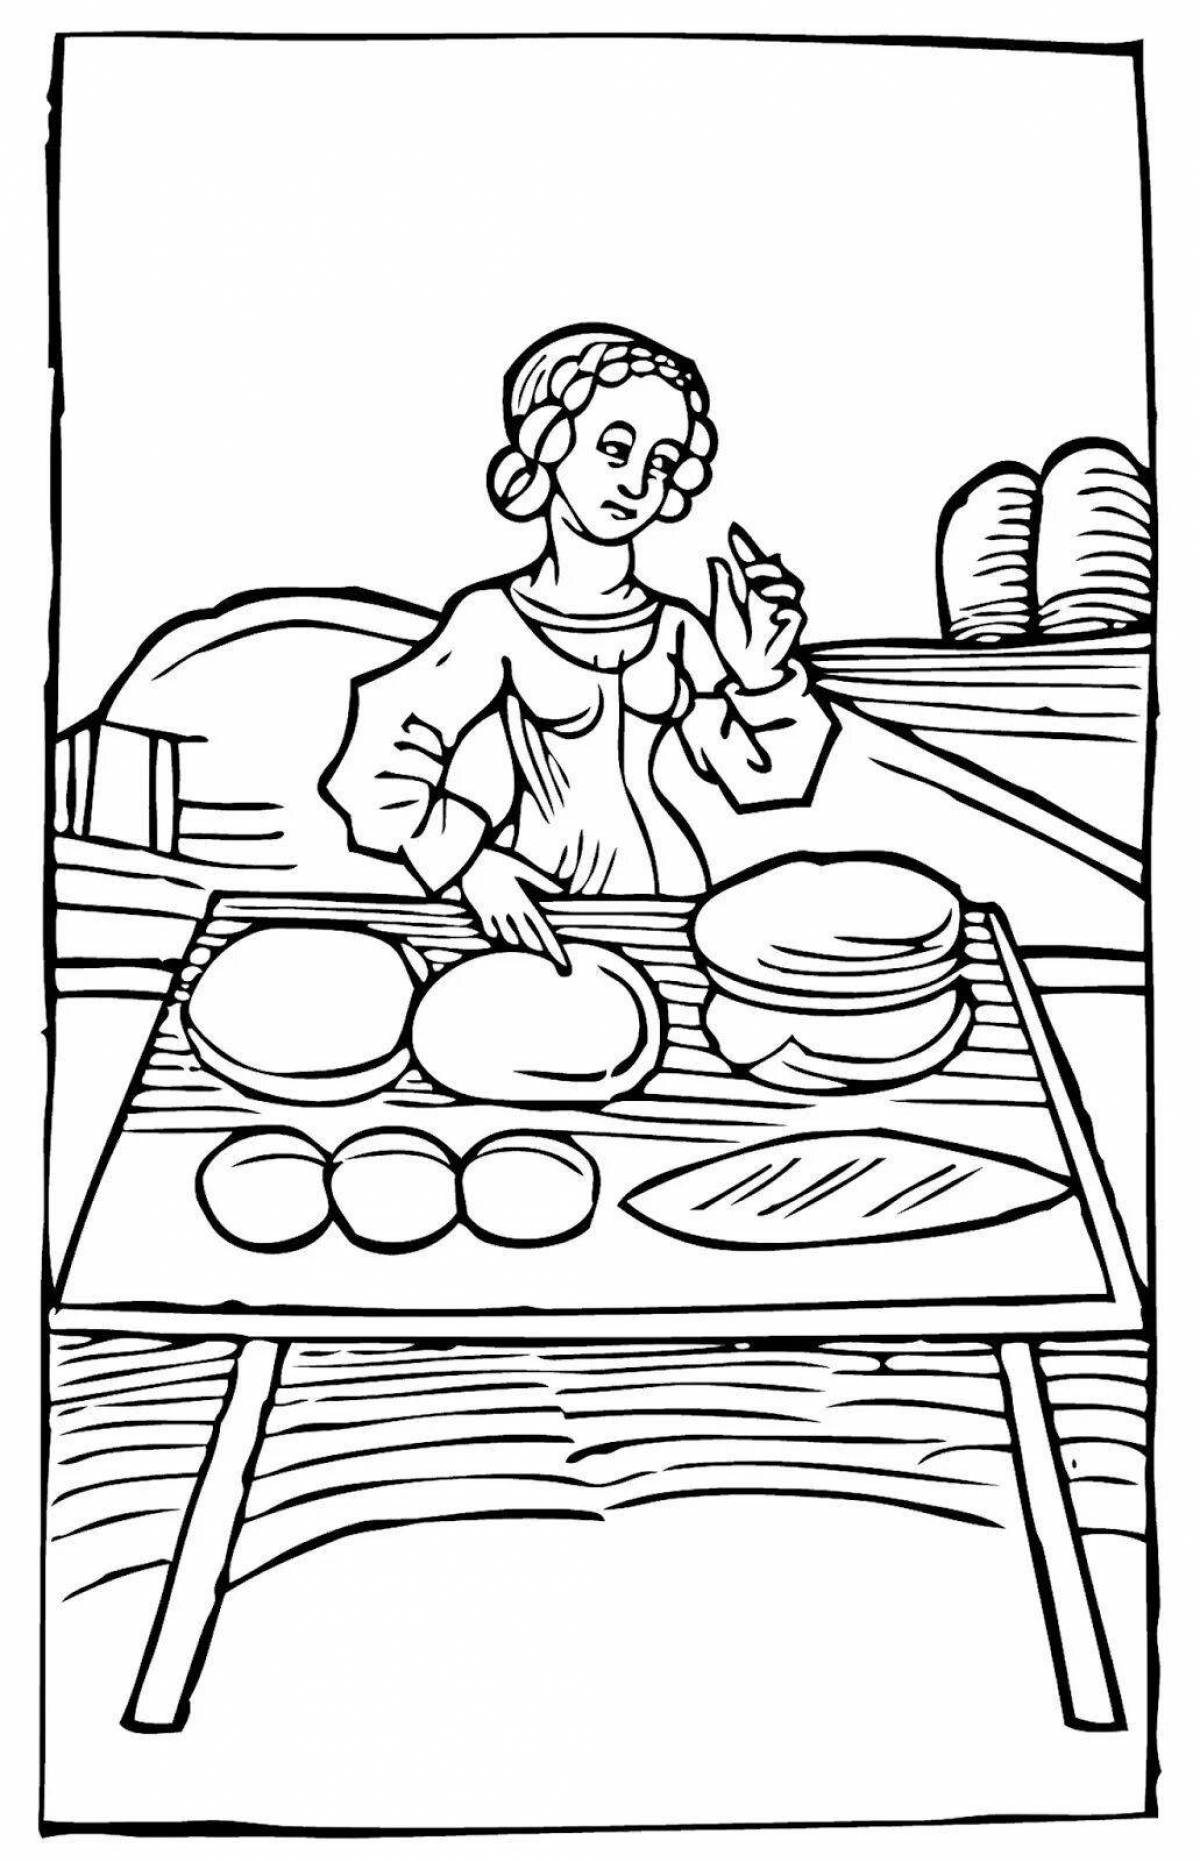 Coloring page delicious baker baking bread